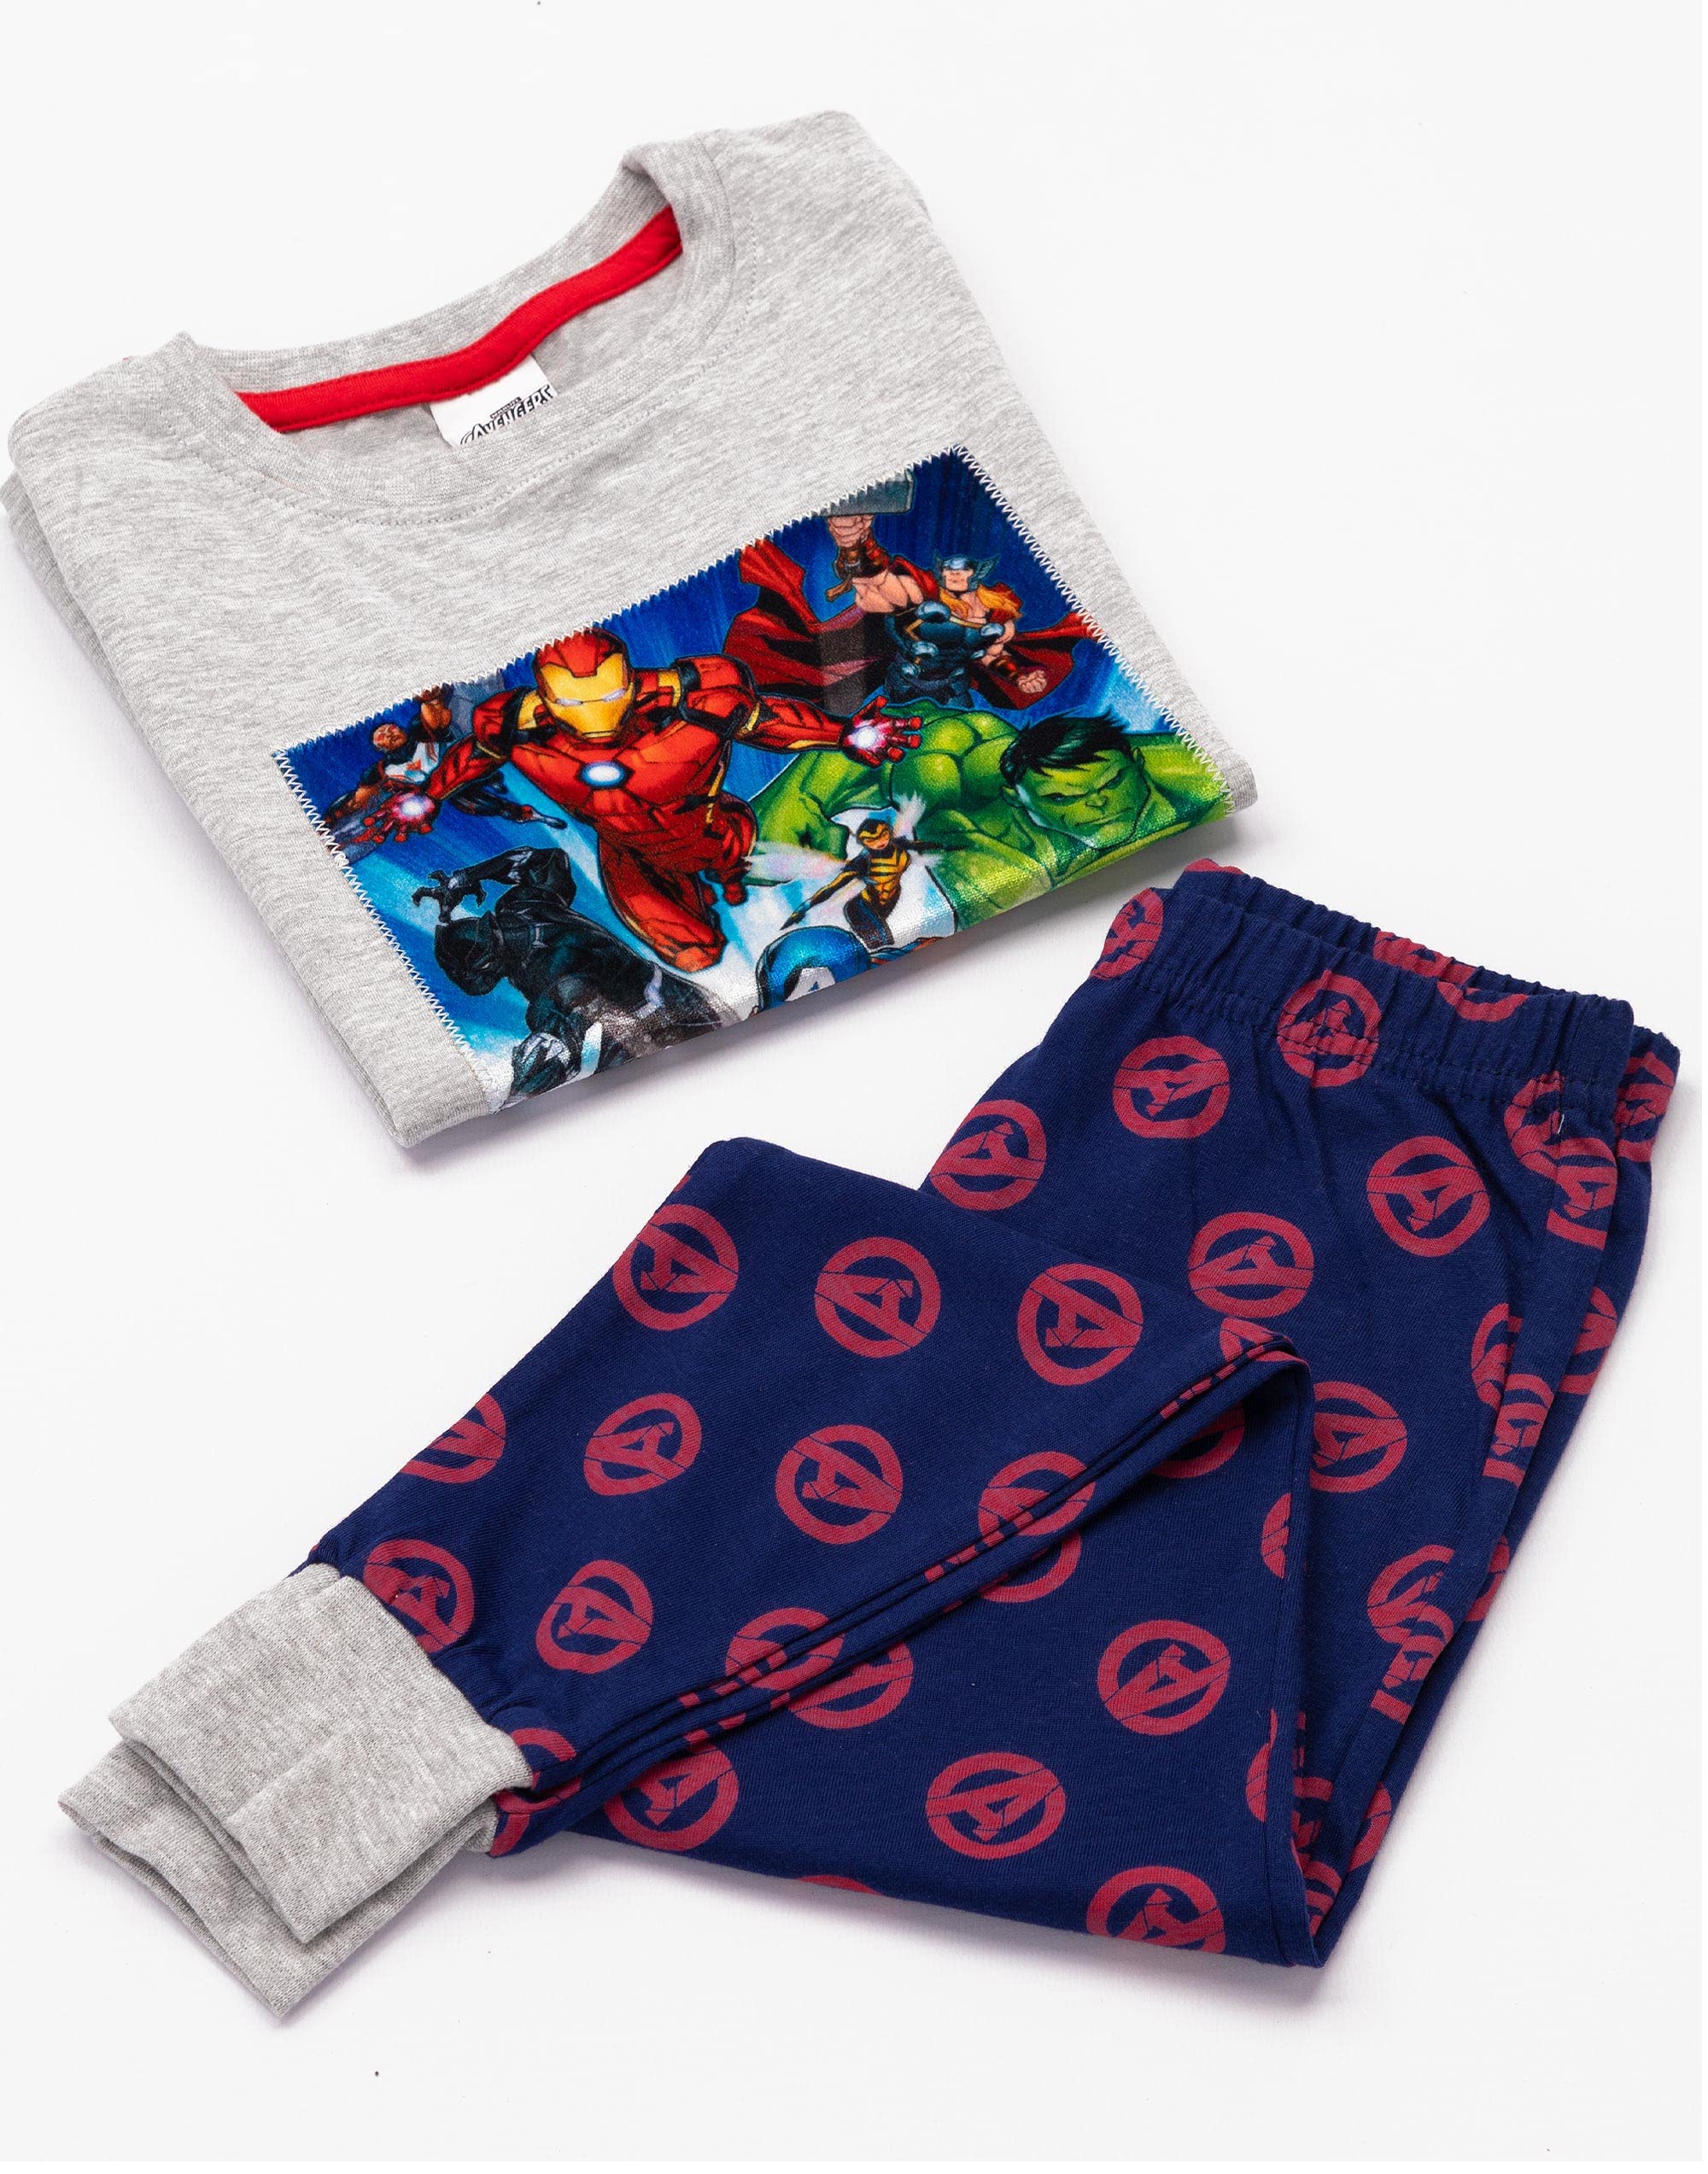 Marvel Avengers Pyjamas Boys Kids Superhero Iron Man T-Shirt Loungepants